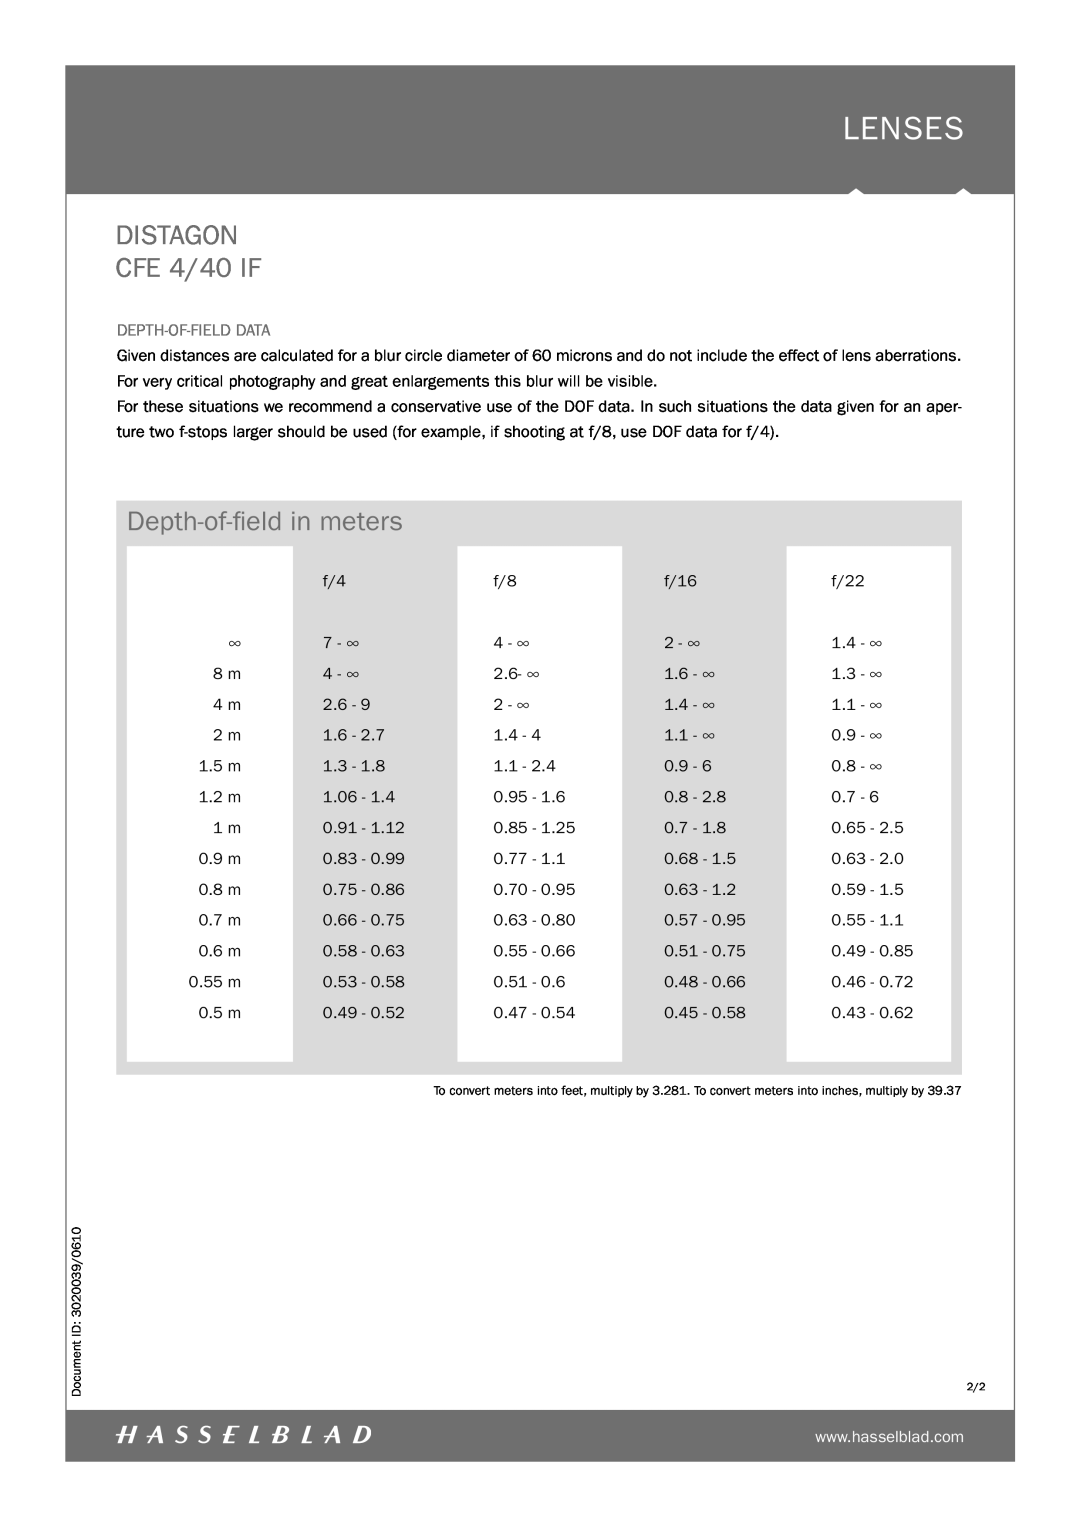 Hasselblad manual Depth-of-ﬁeld in meters, Depth-Of-Field Data, Lenses, DISTAGON CFE 4/40 IF 